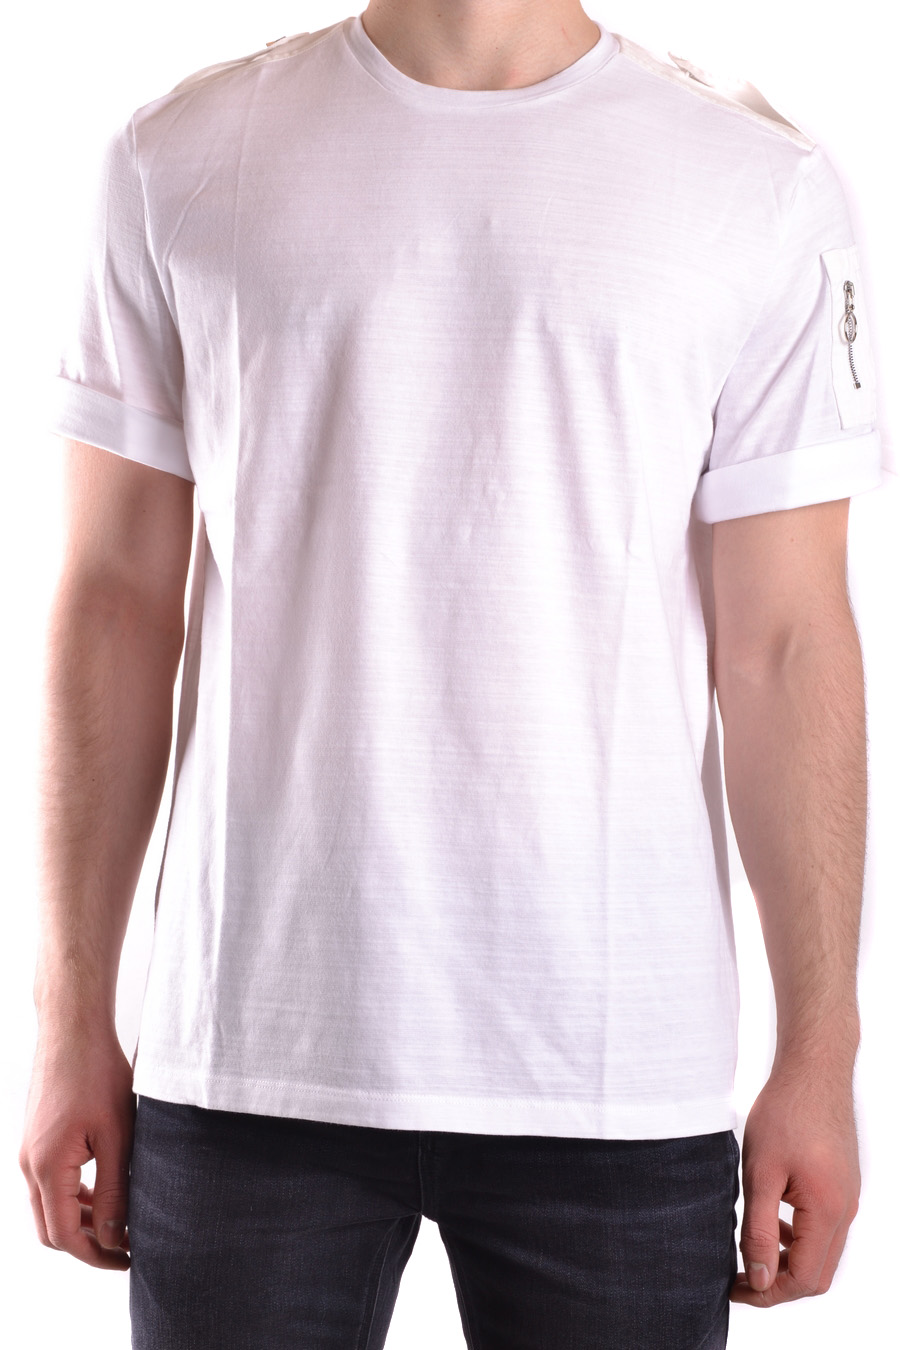 NEIL BARRETT T-shirts | ViganoBoutique.com